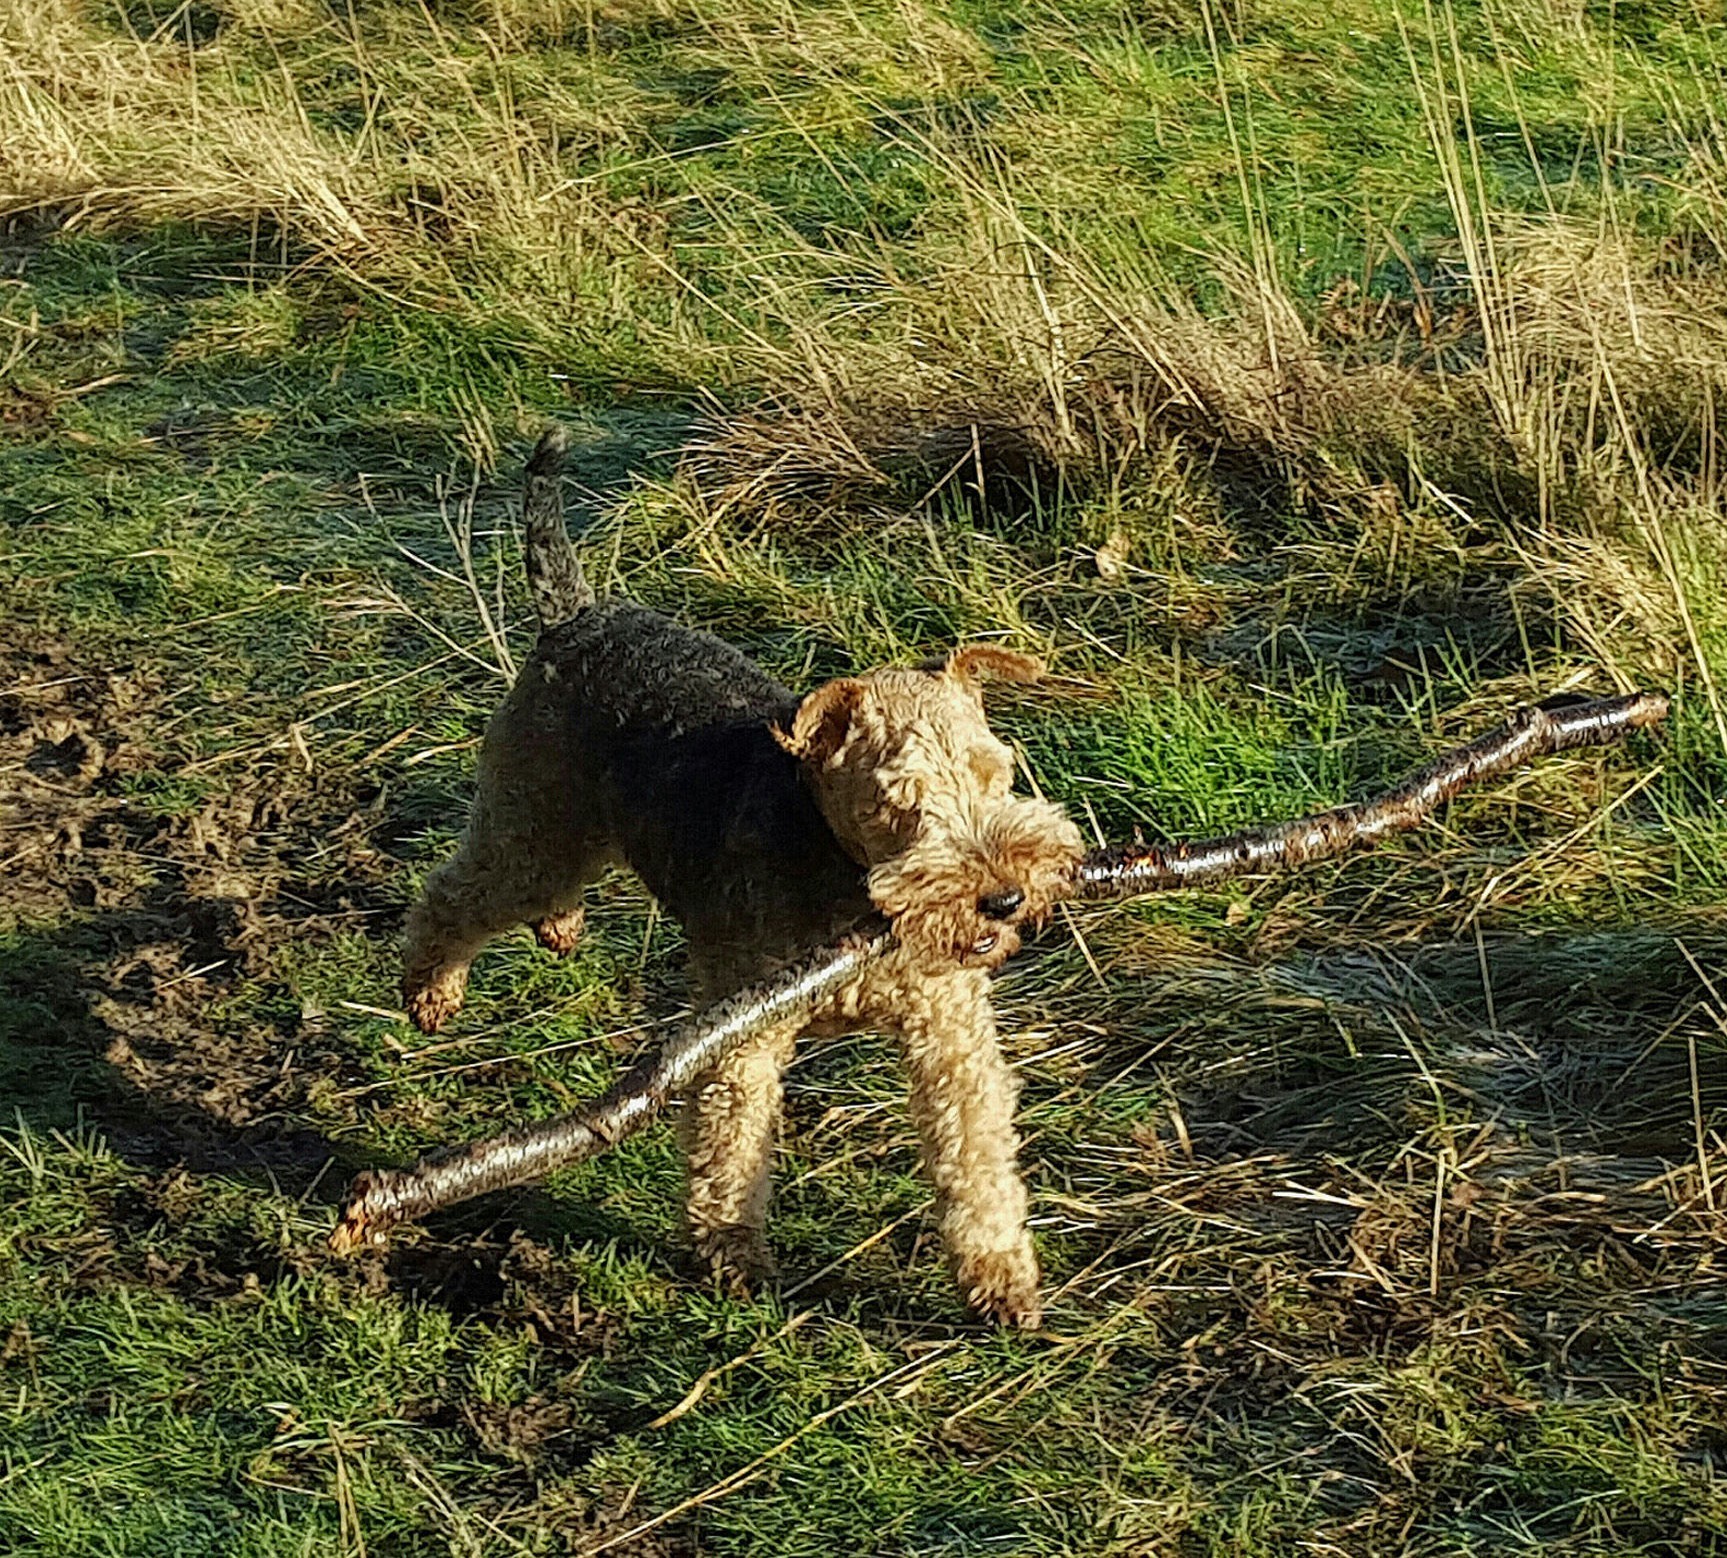 Throwing sticks for dogs warning